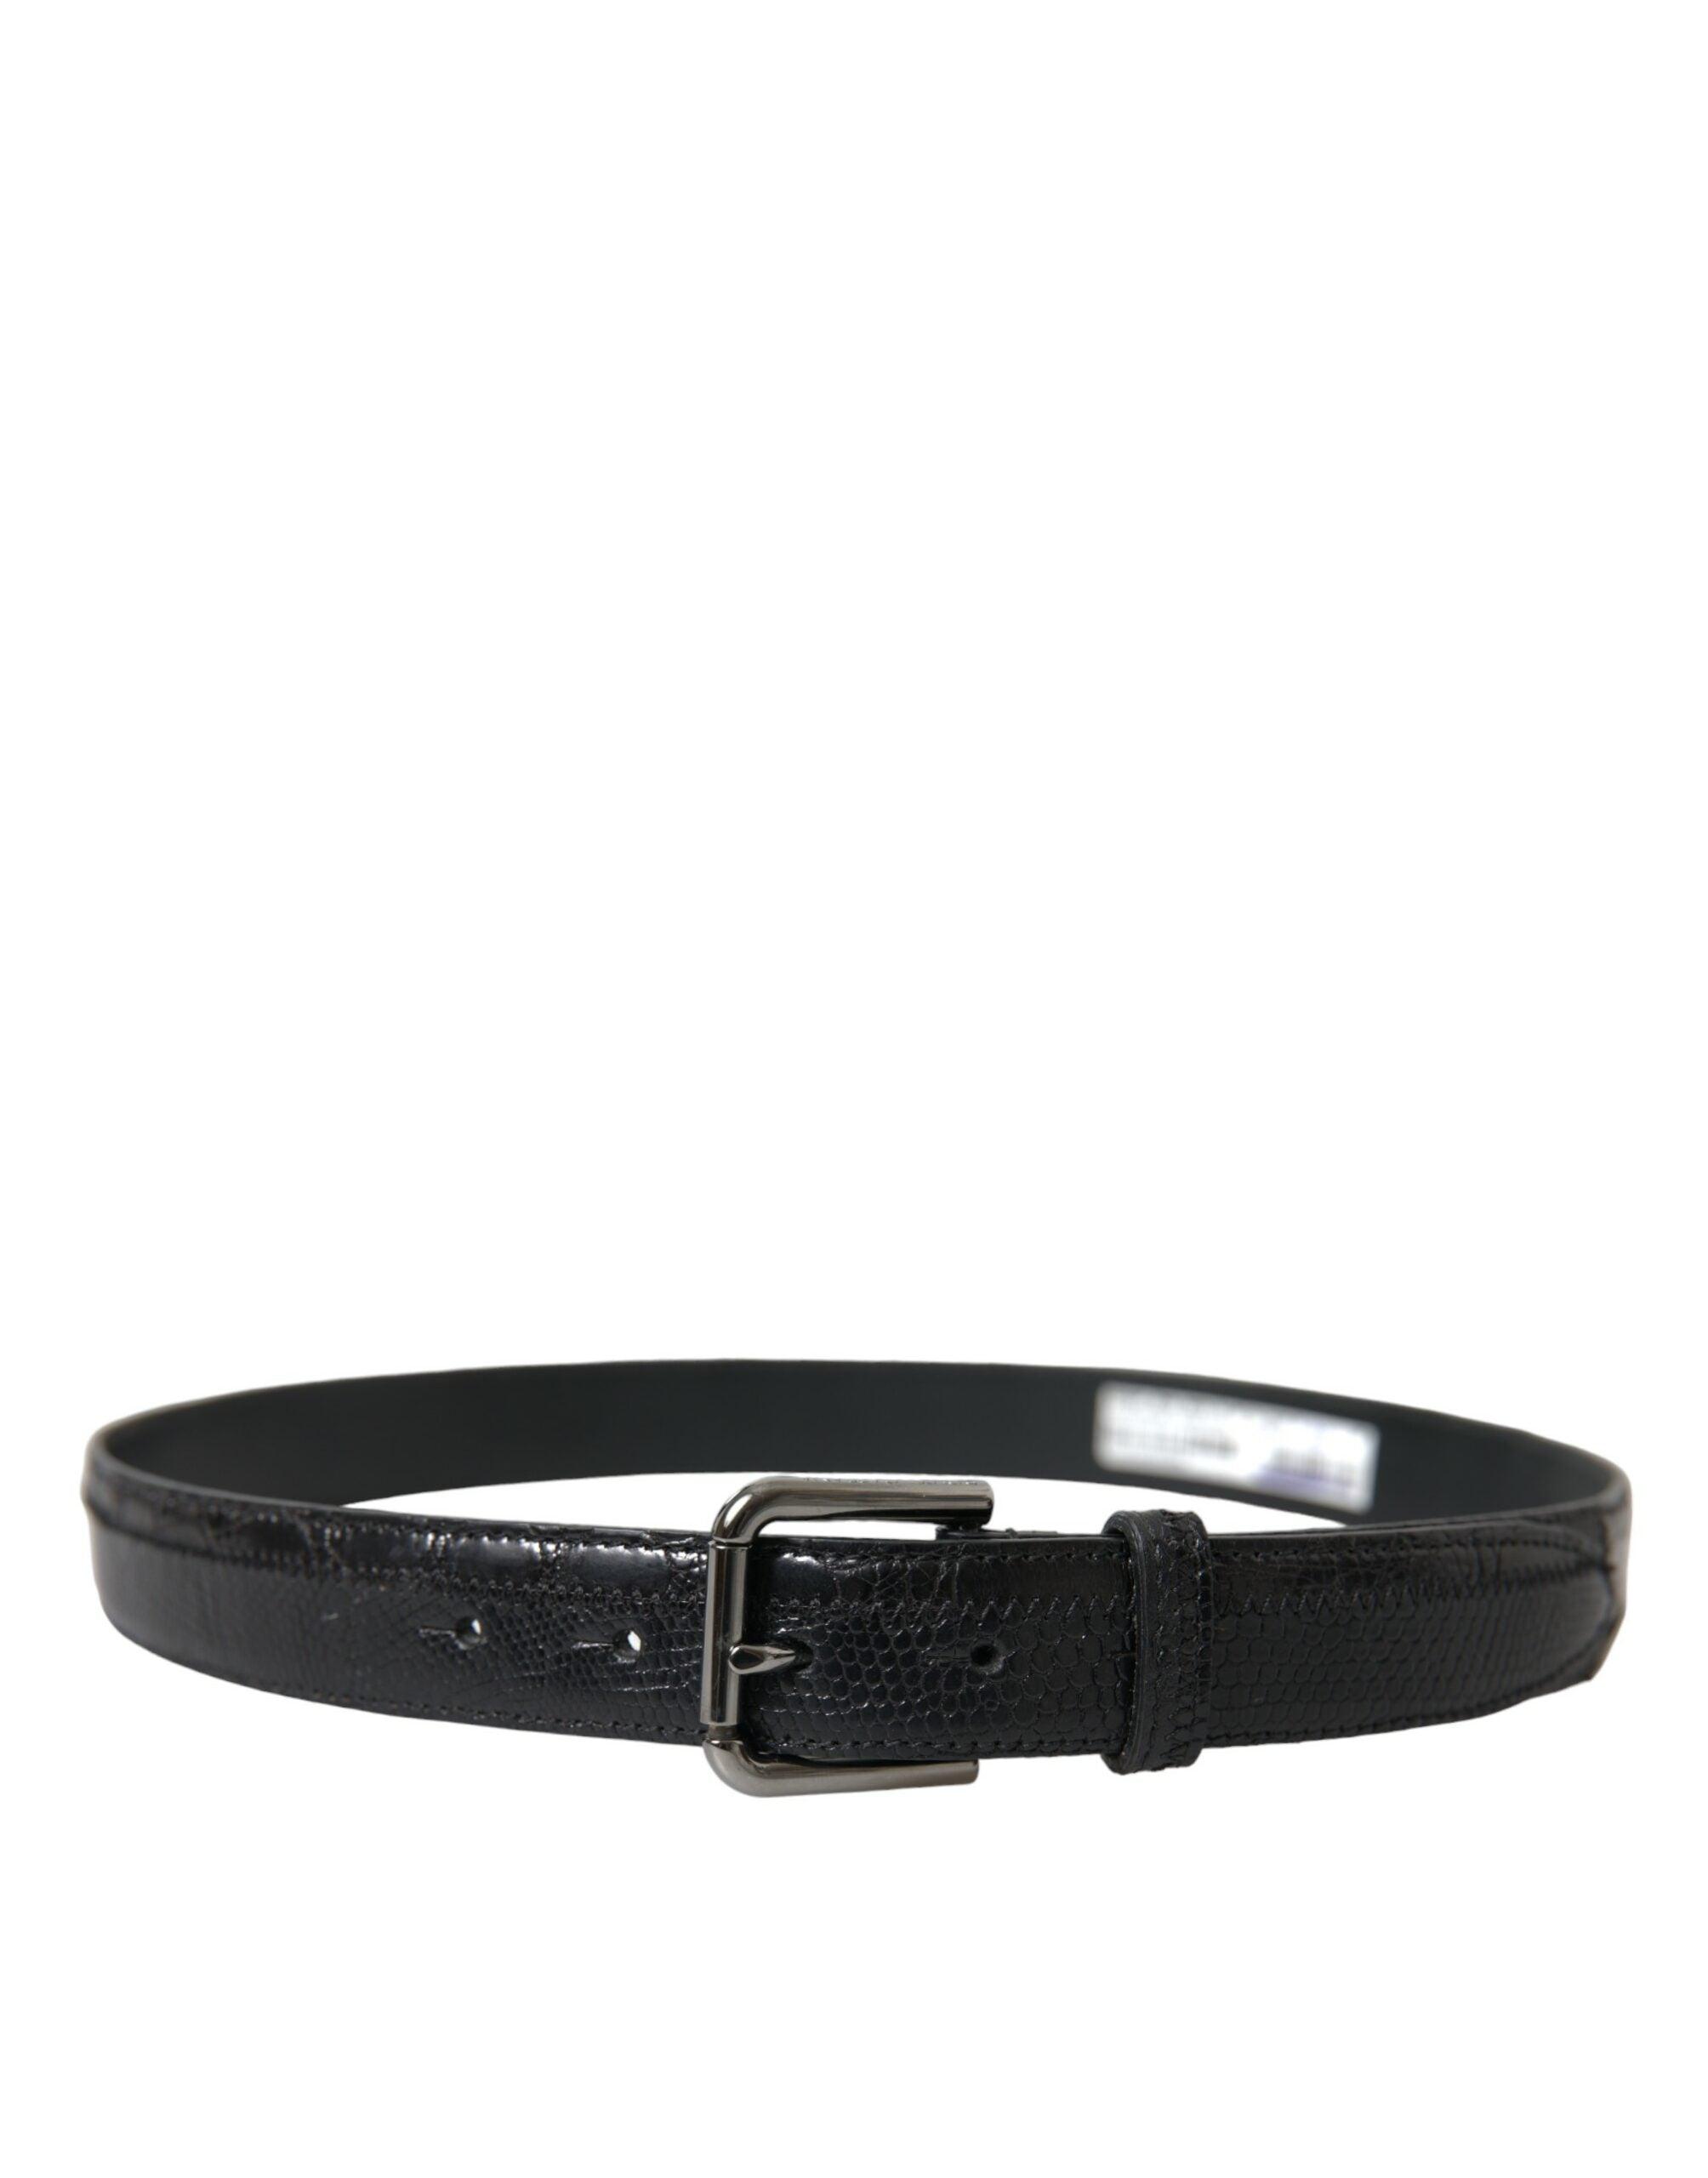 Elegant Black Leather Belt with Metal Buckle - Divitiae Glamour